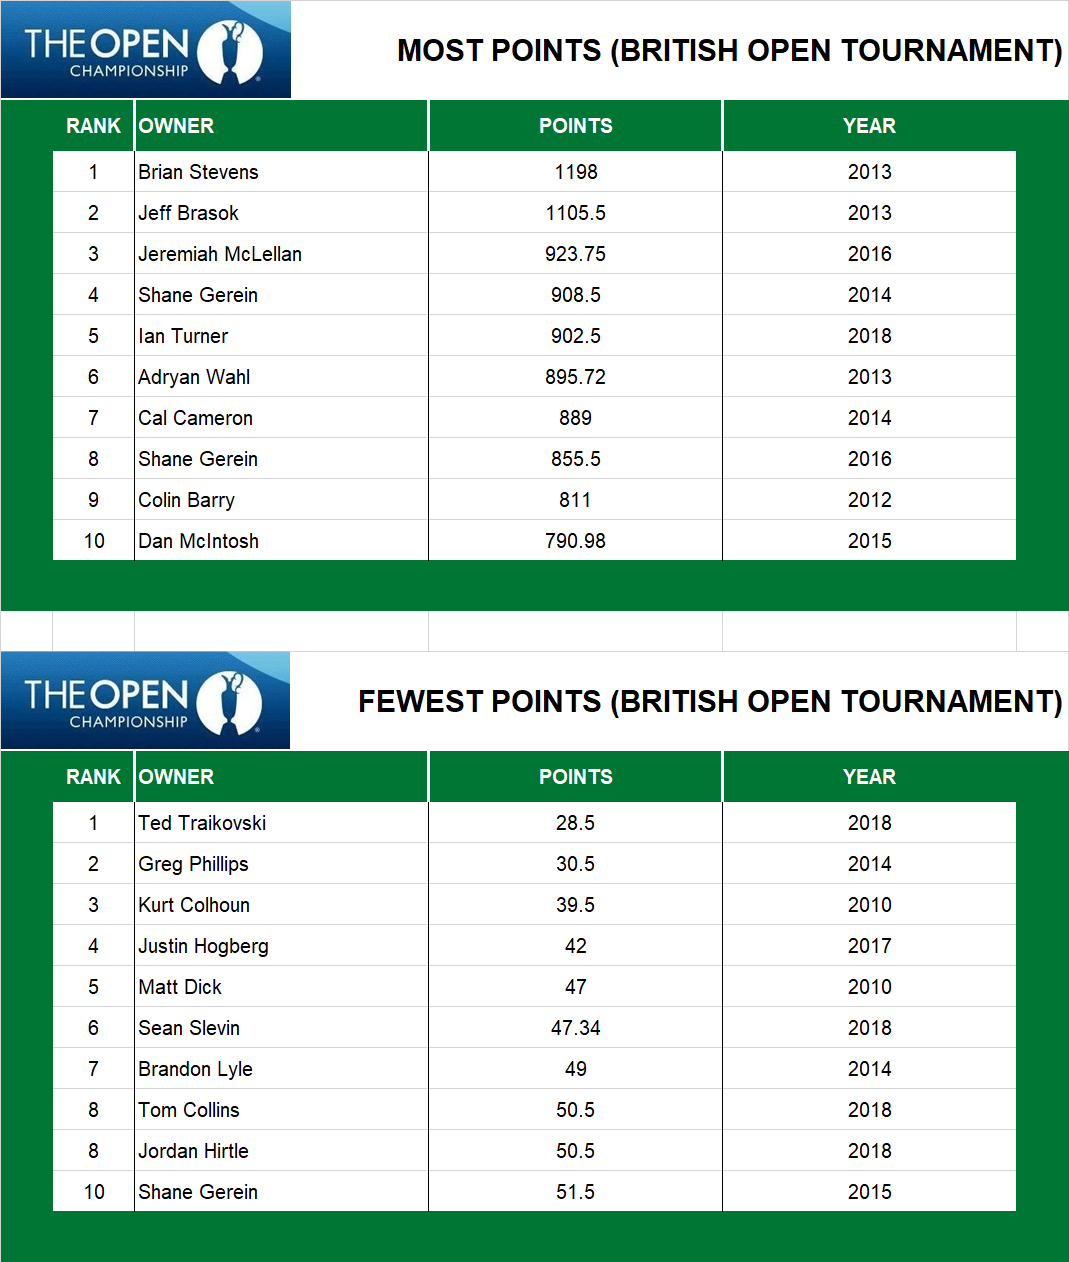 Points in a British Open Tournament (Pre-2019)